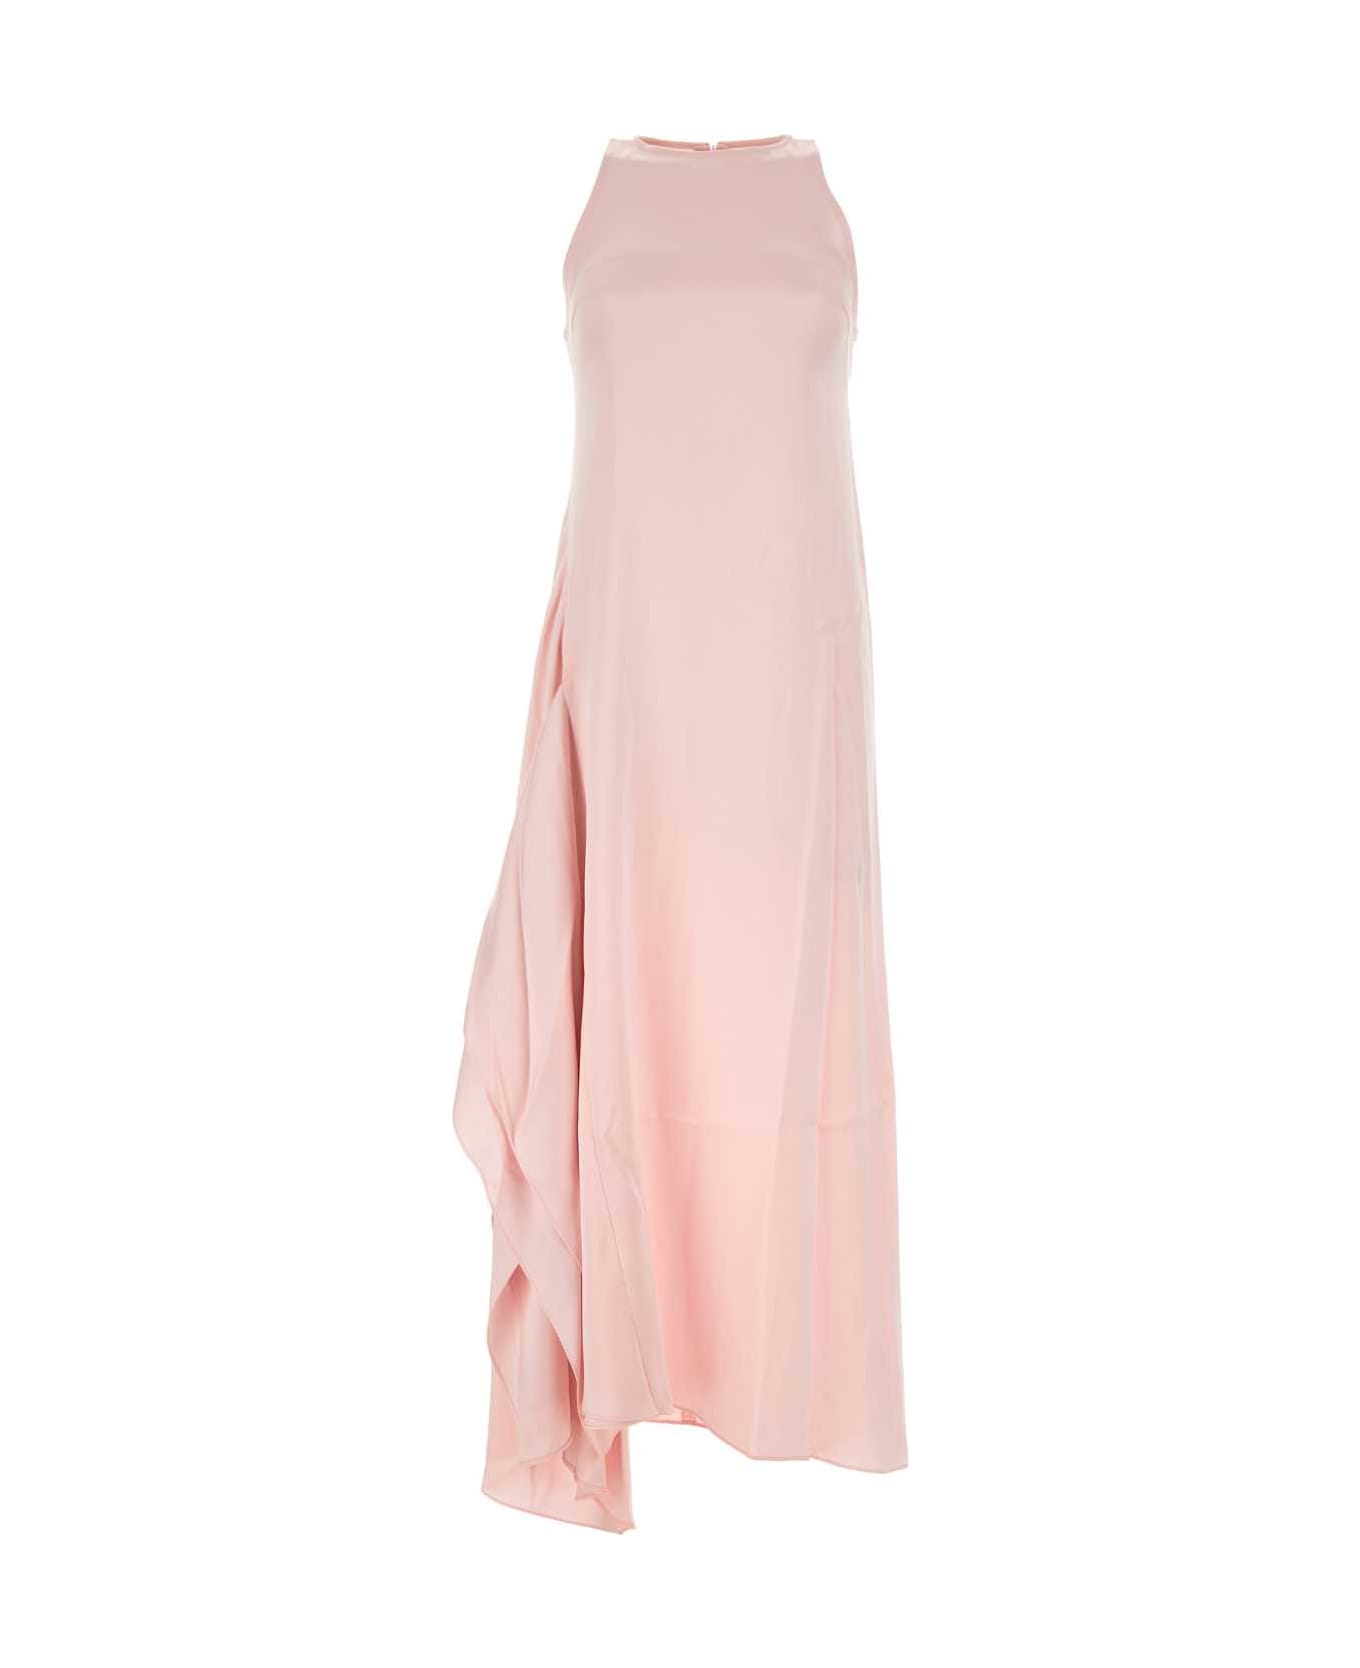 J.W. Anderson Light Pink Satin Dress - PINK